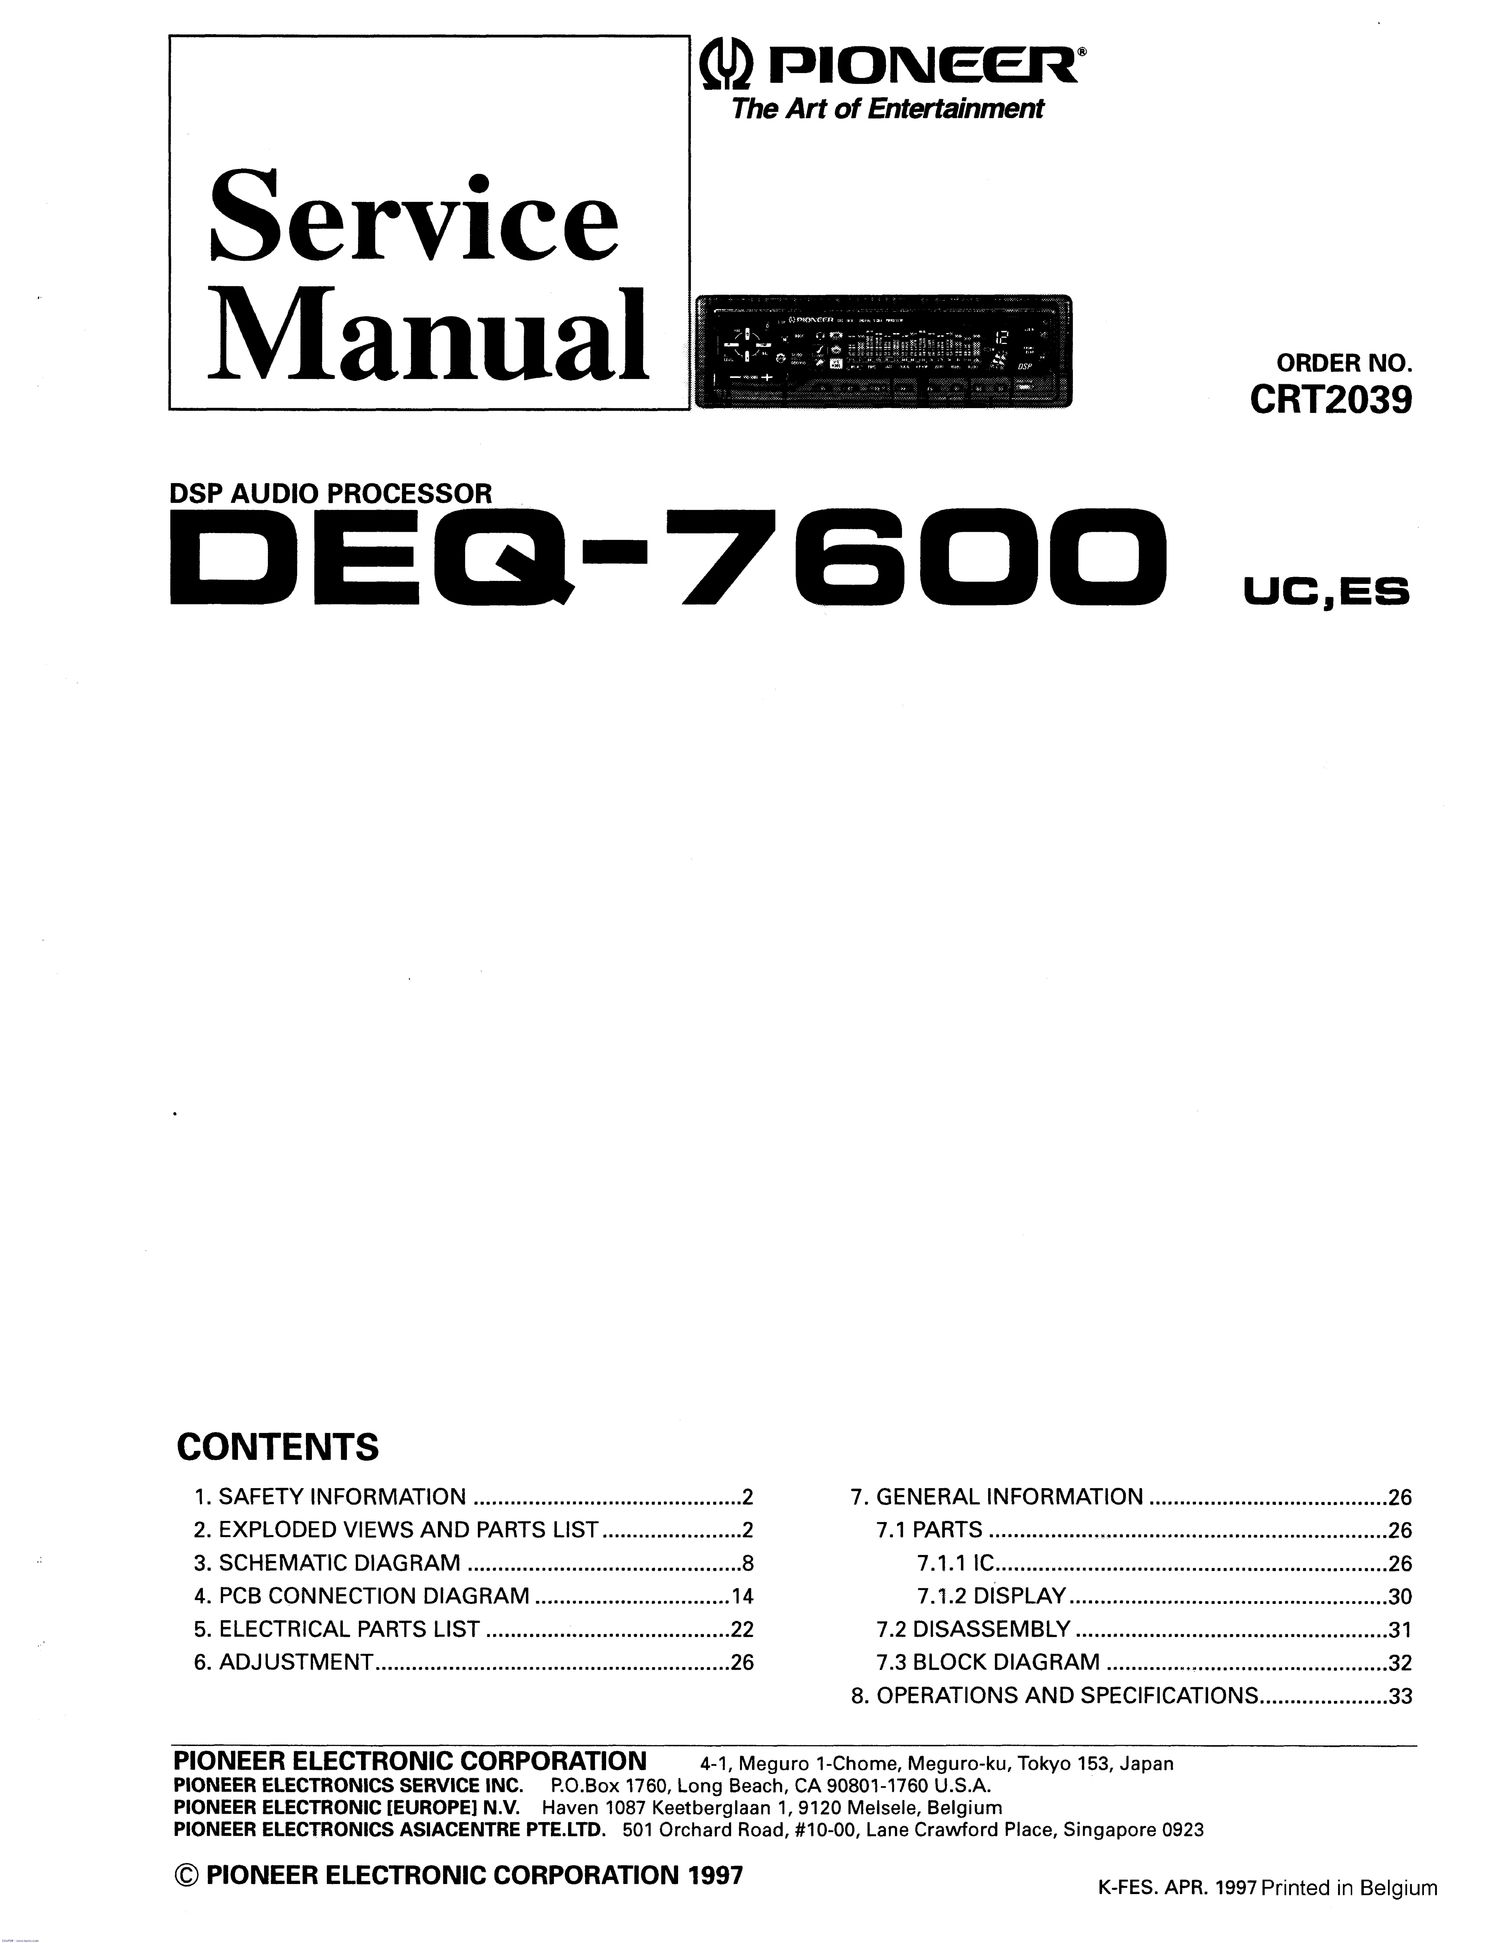 pioneer deq 7600 service manual